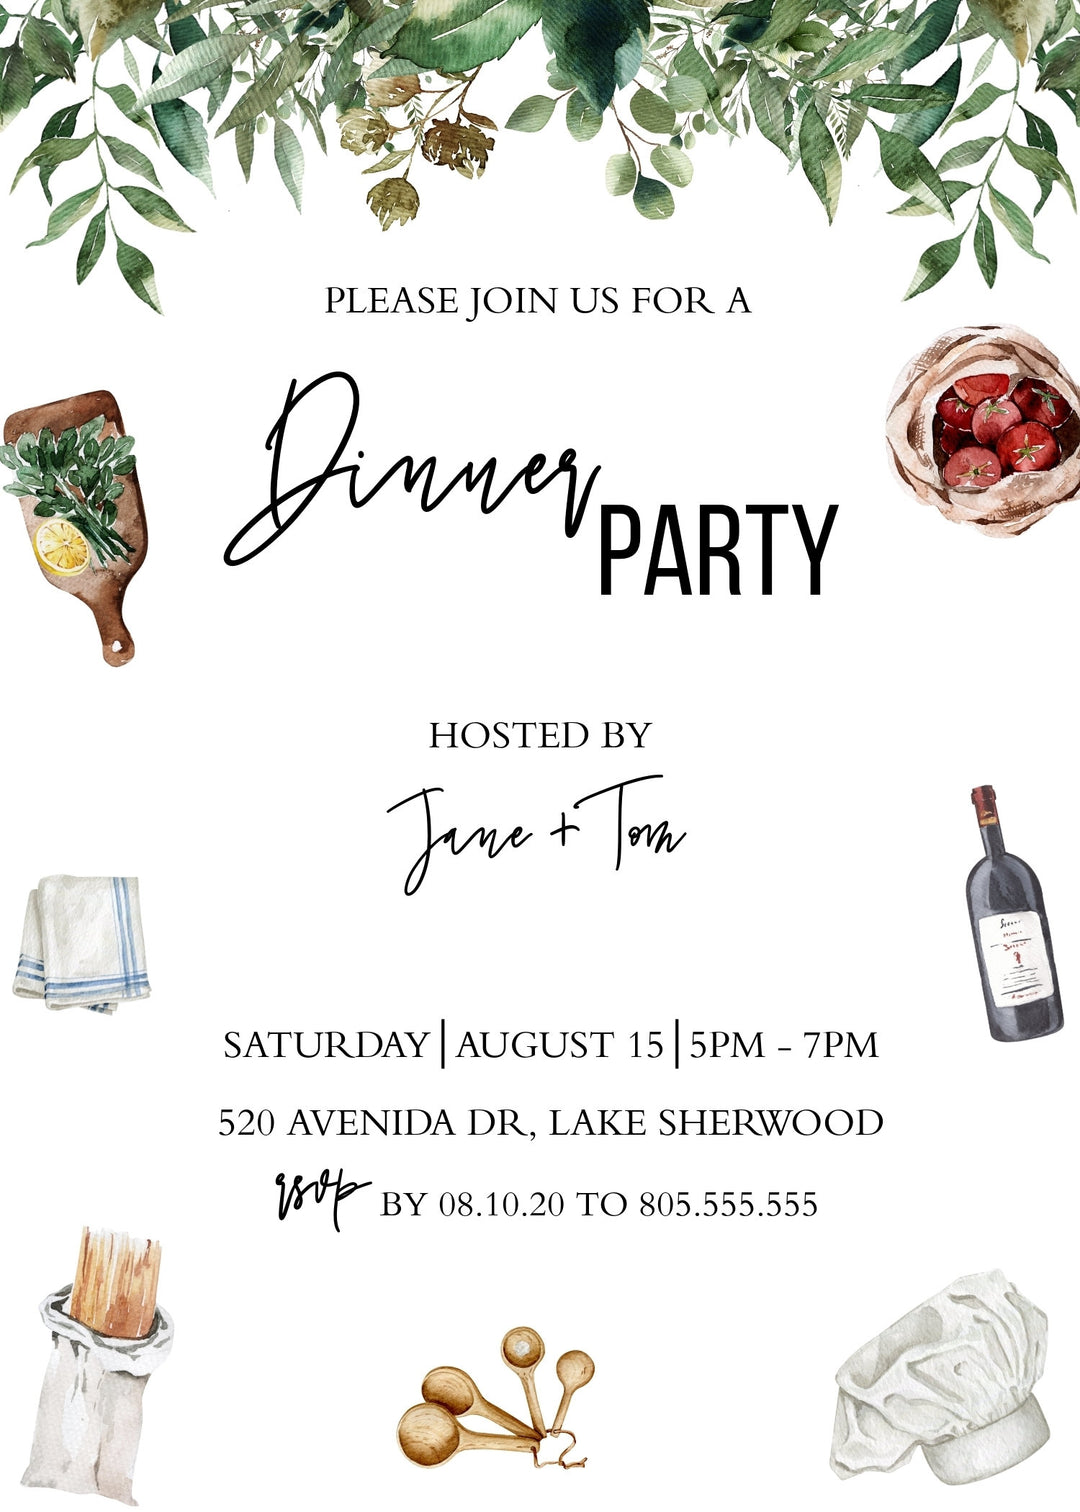 Dinner Party Printable Invitation - Housewarming Dinner Party Invitation - Rehearsal Dinner Party Invitation - Neighborhood Dinner Party